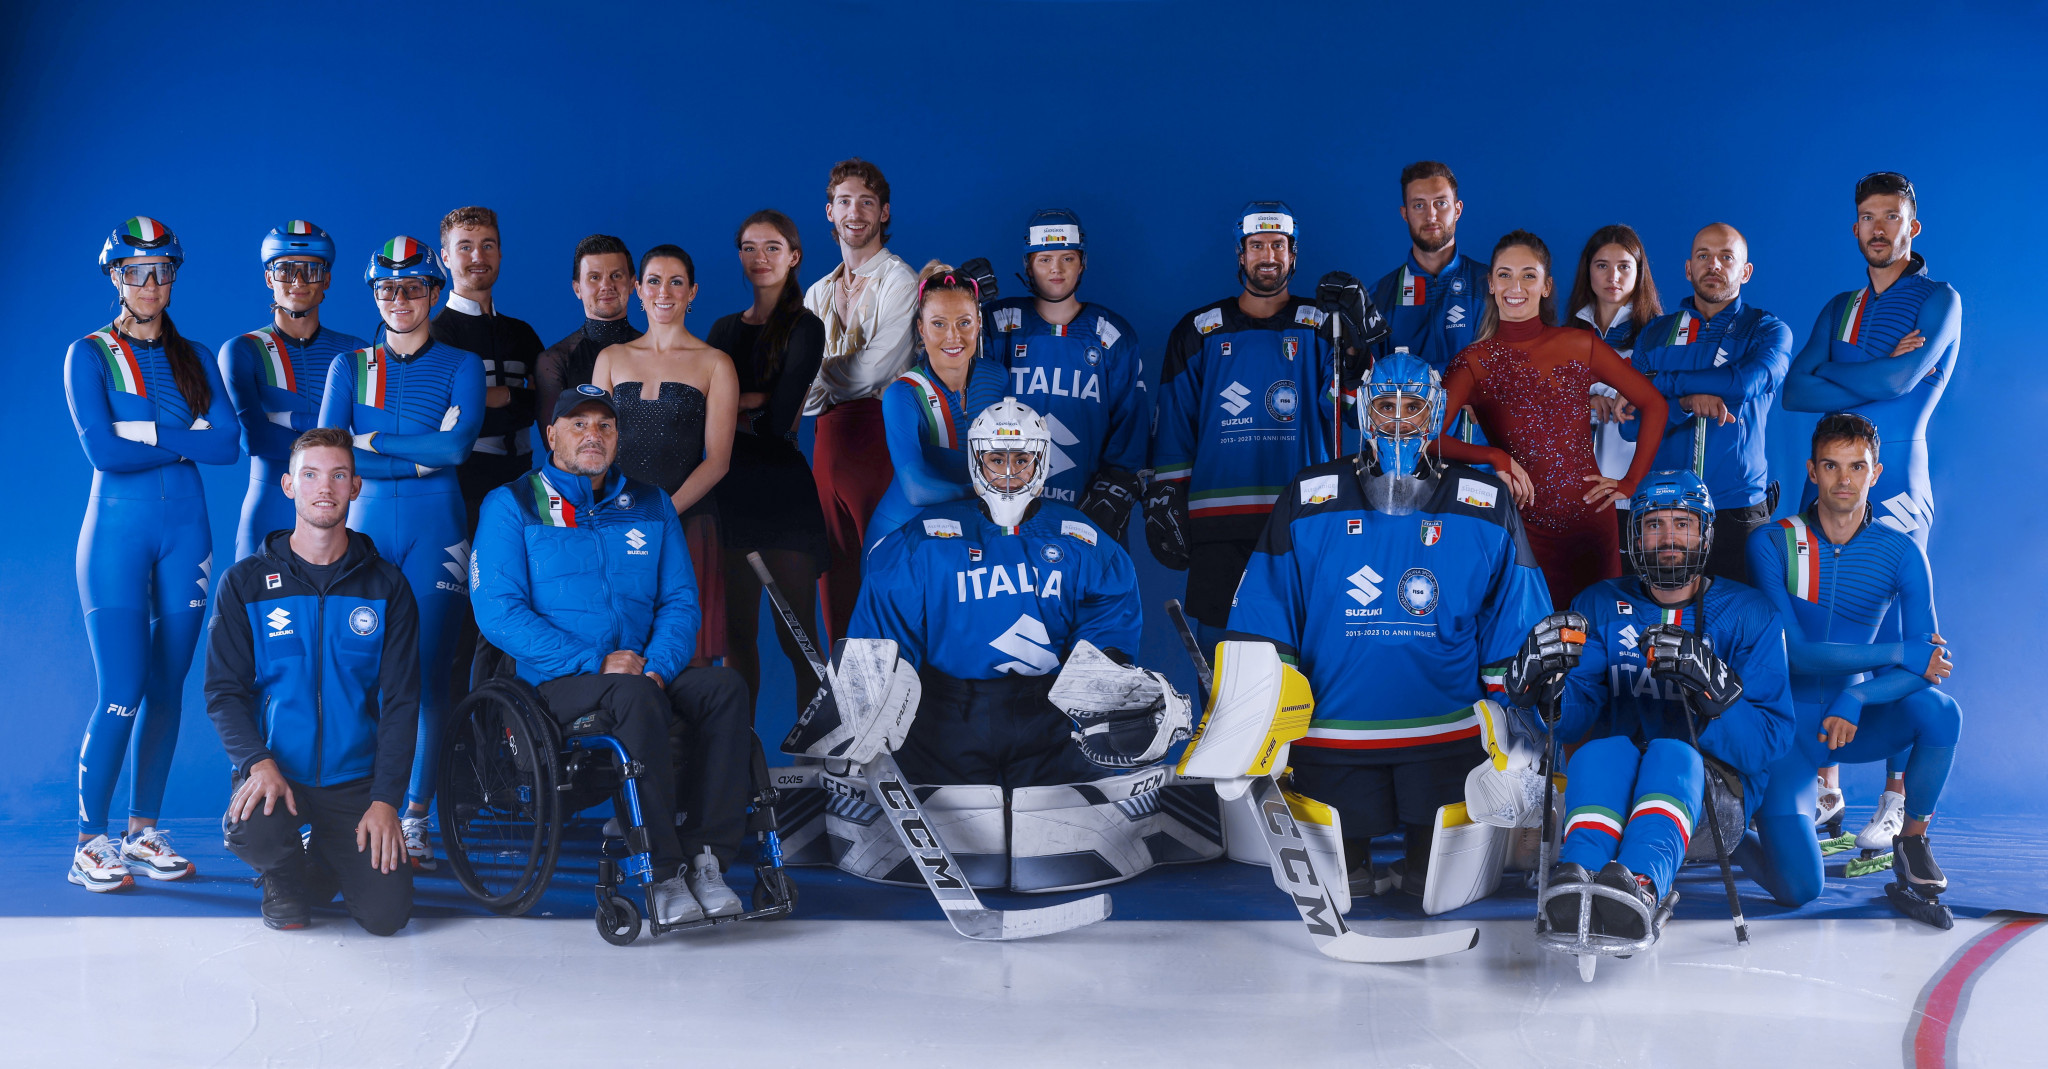 Italian ice sports athletes to wear FILA outfits at Milan Cortina 2026 Winter Olympics 